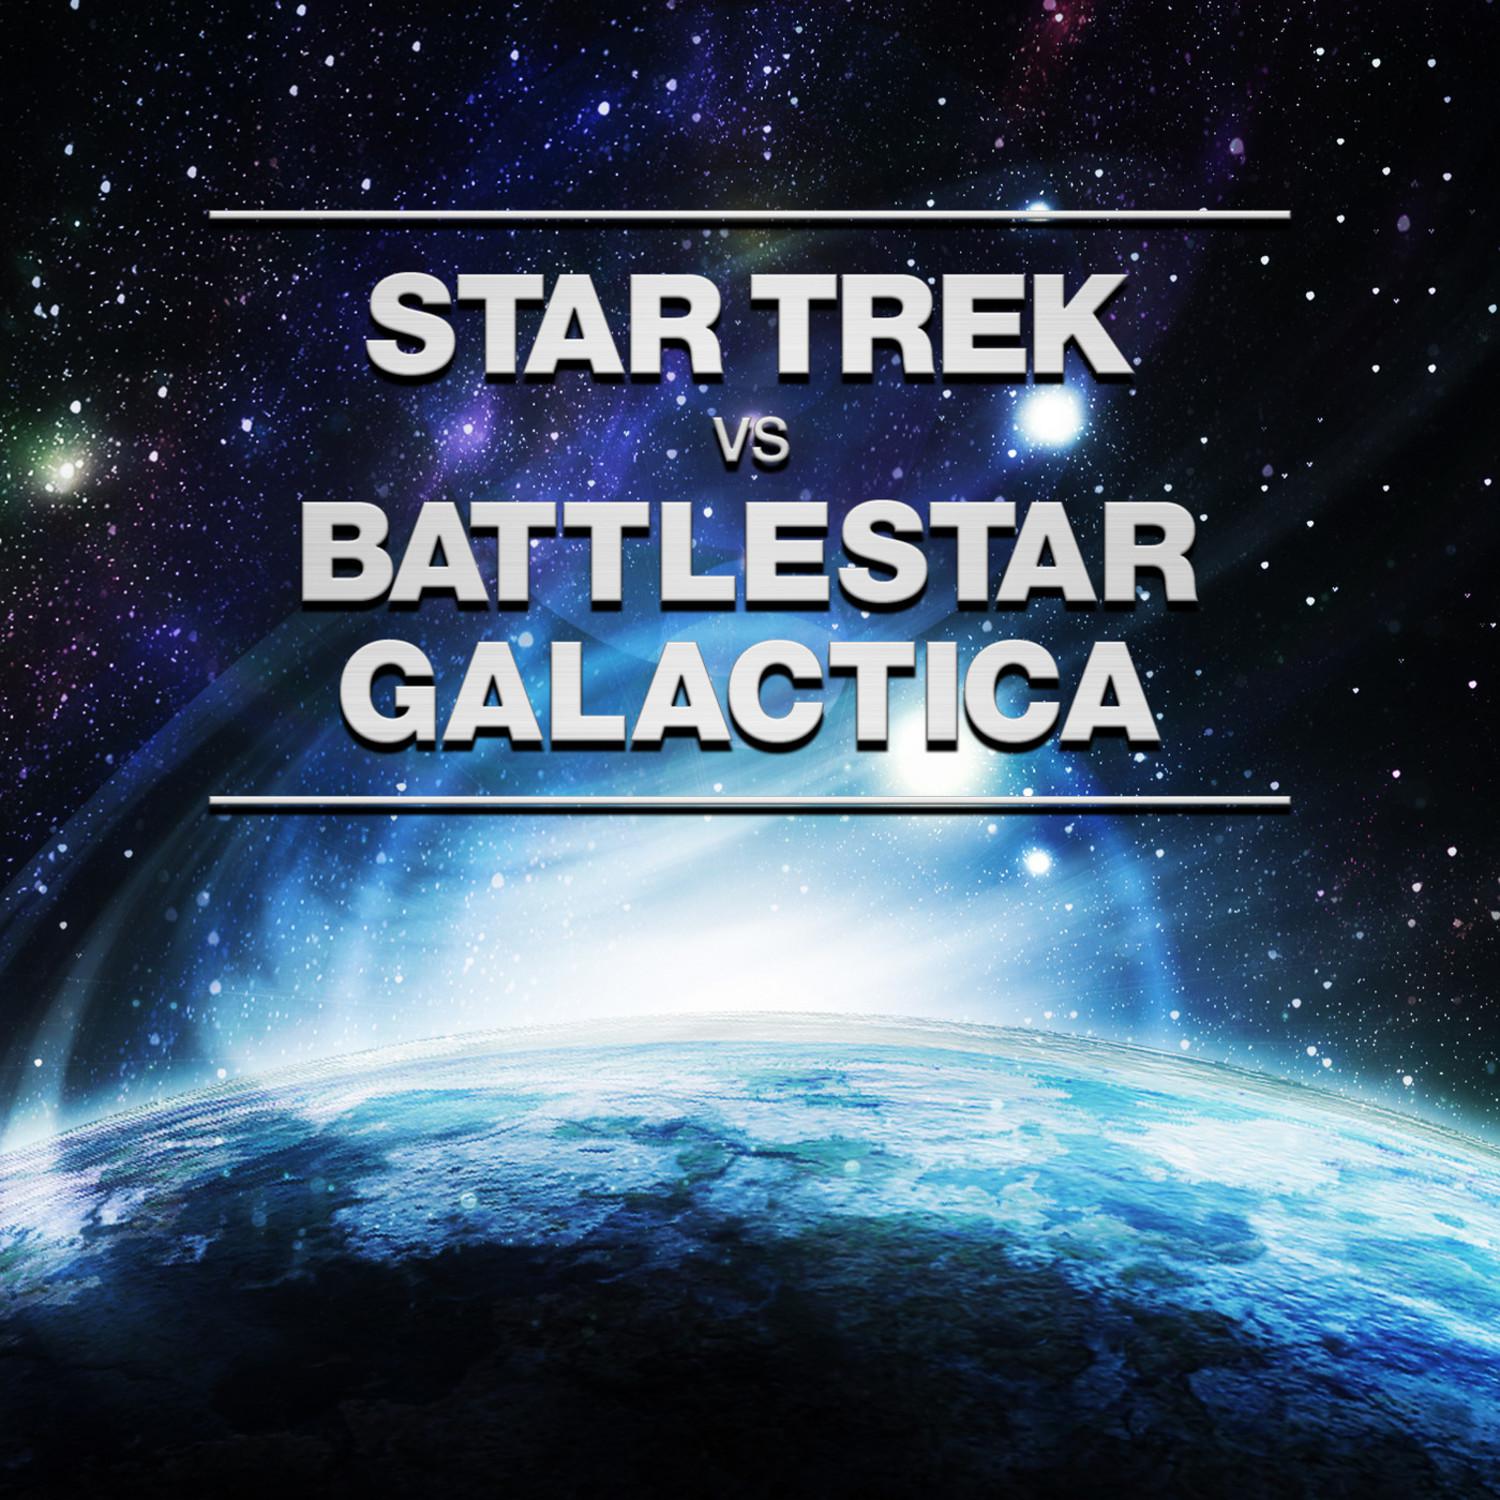 Battlestar Galactica: The Red Nova